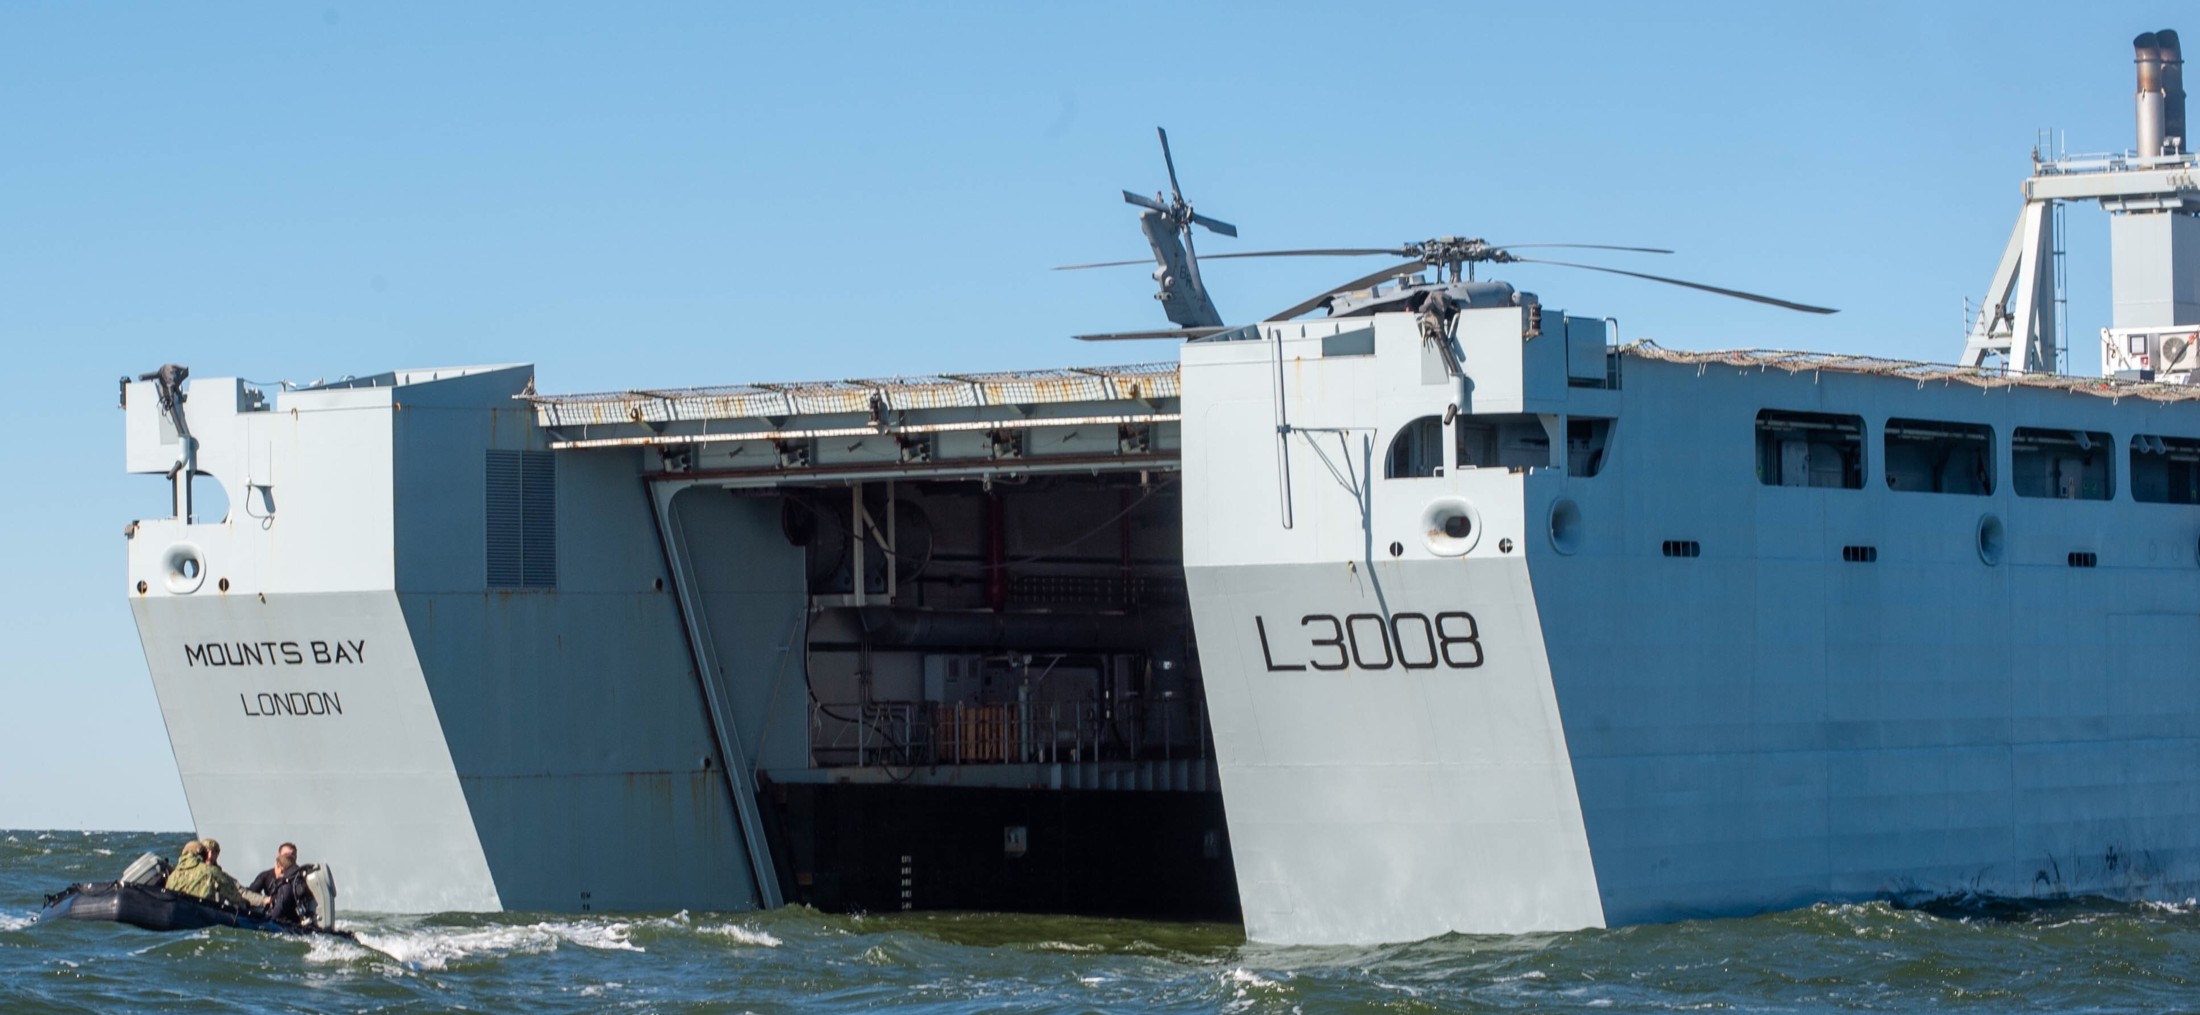 l-3008 rfa mounts bay dock landing ship lsd royal fleet auxilary navy 35 well deck